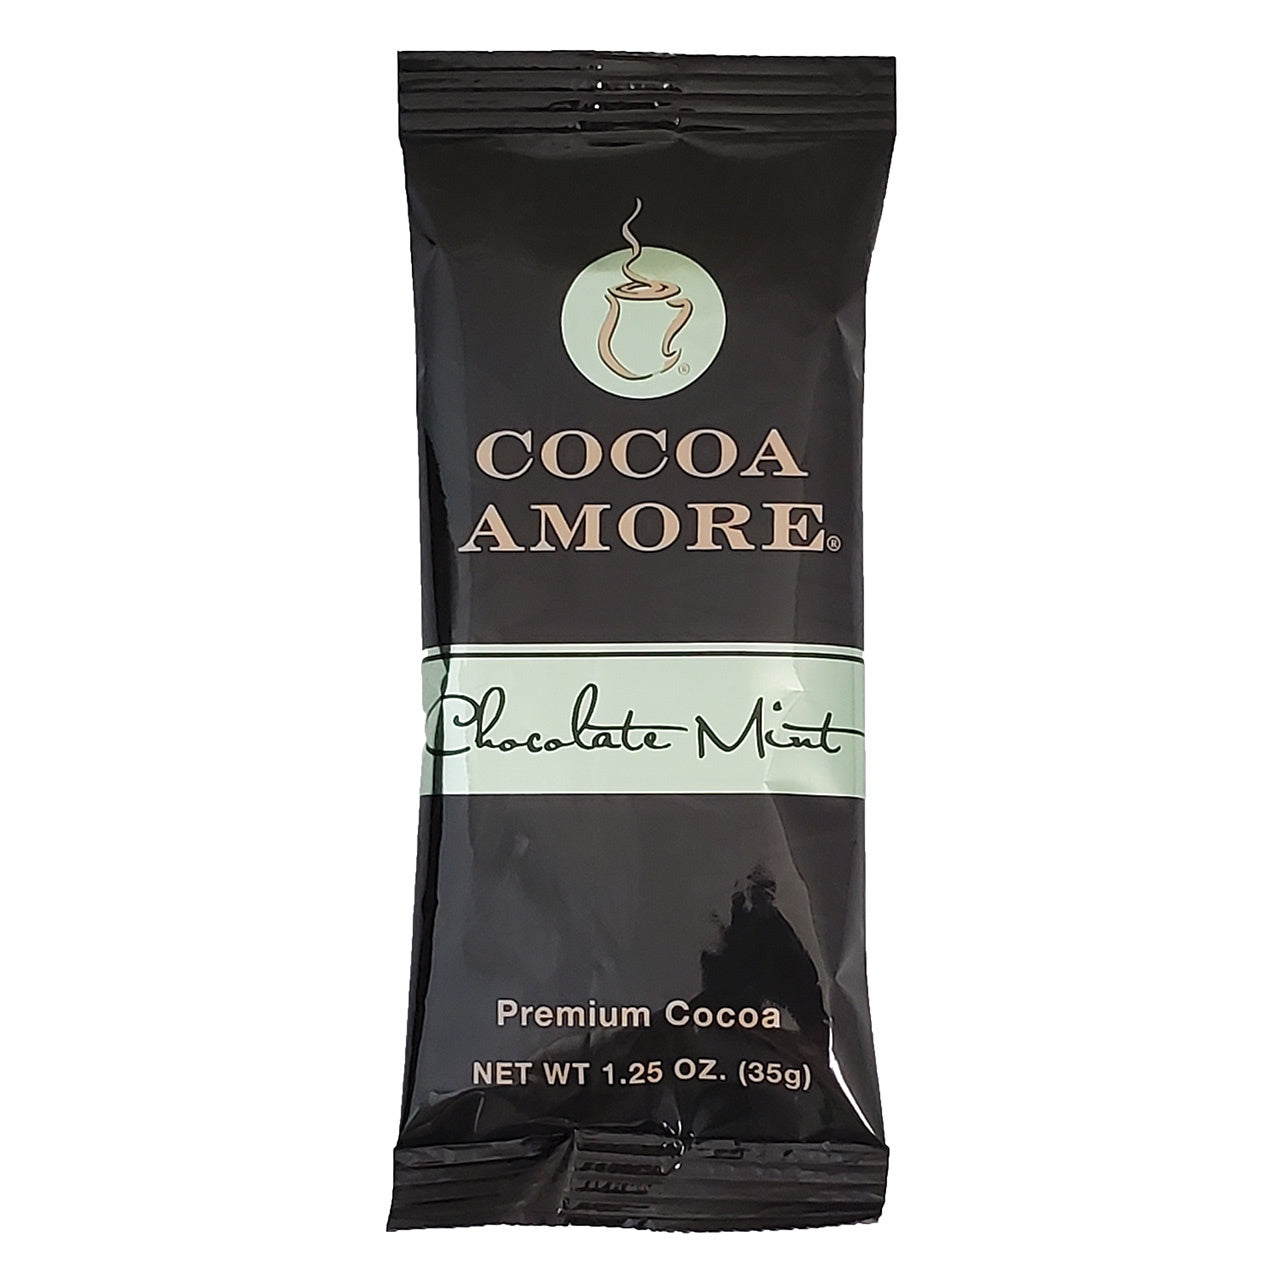 Cocoa Amore Chocolate Mint Hot Chocolate Mix, 1.25 oz.